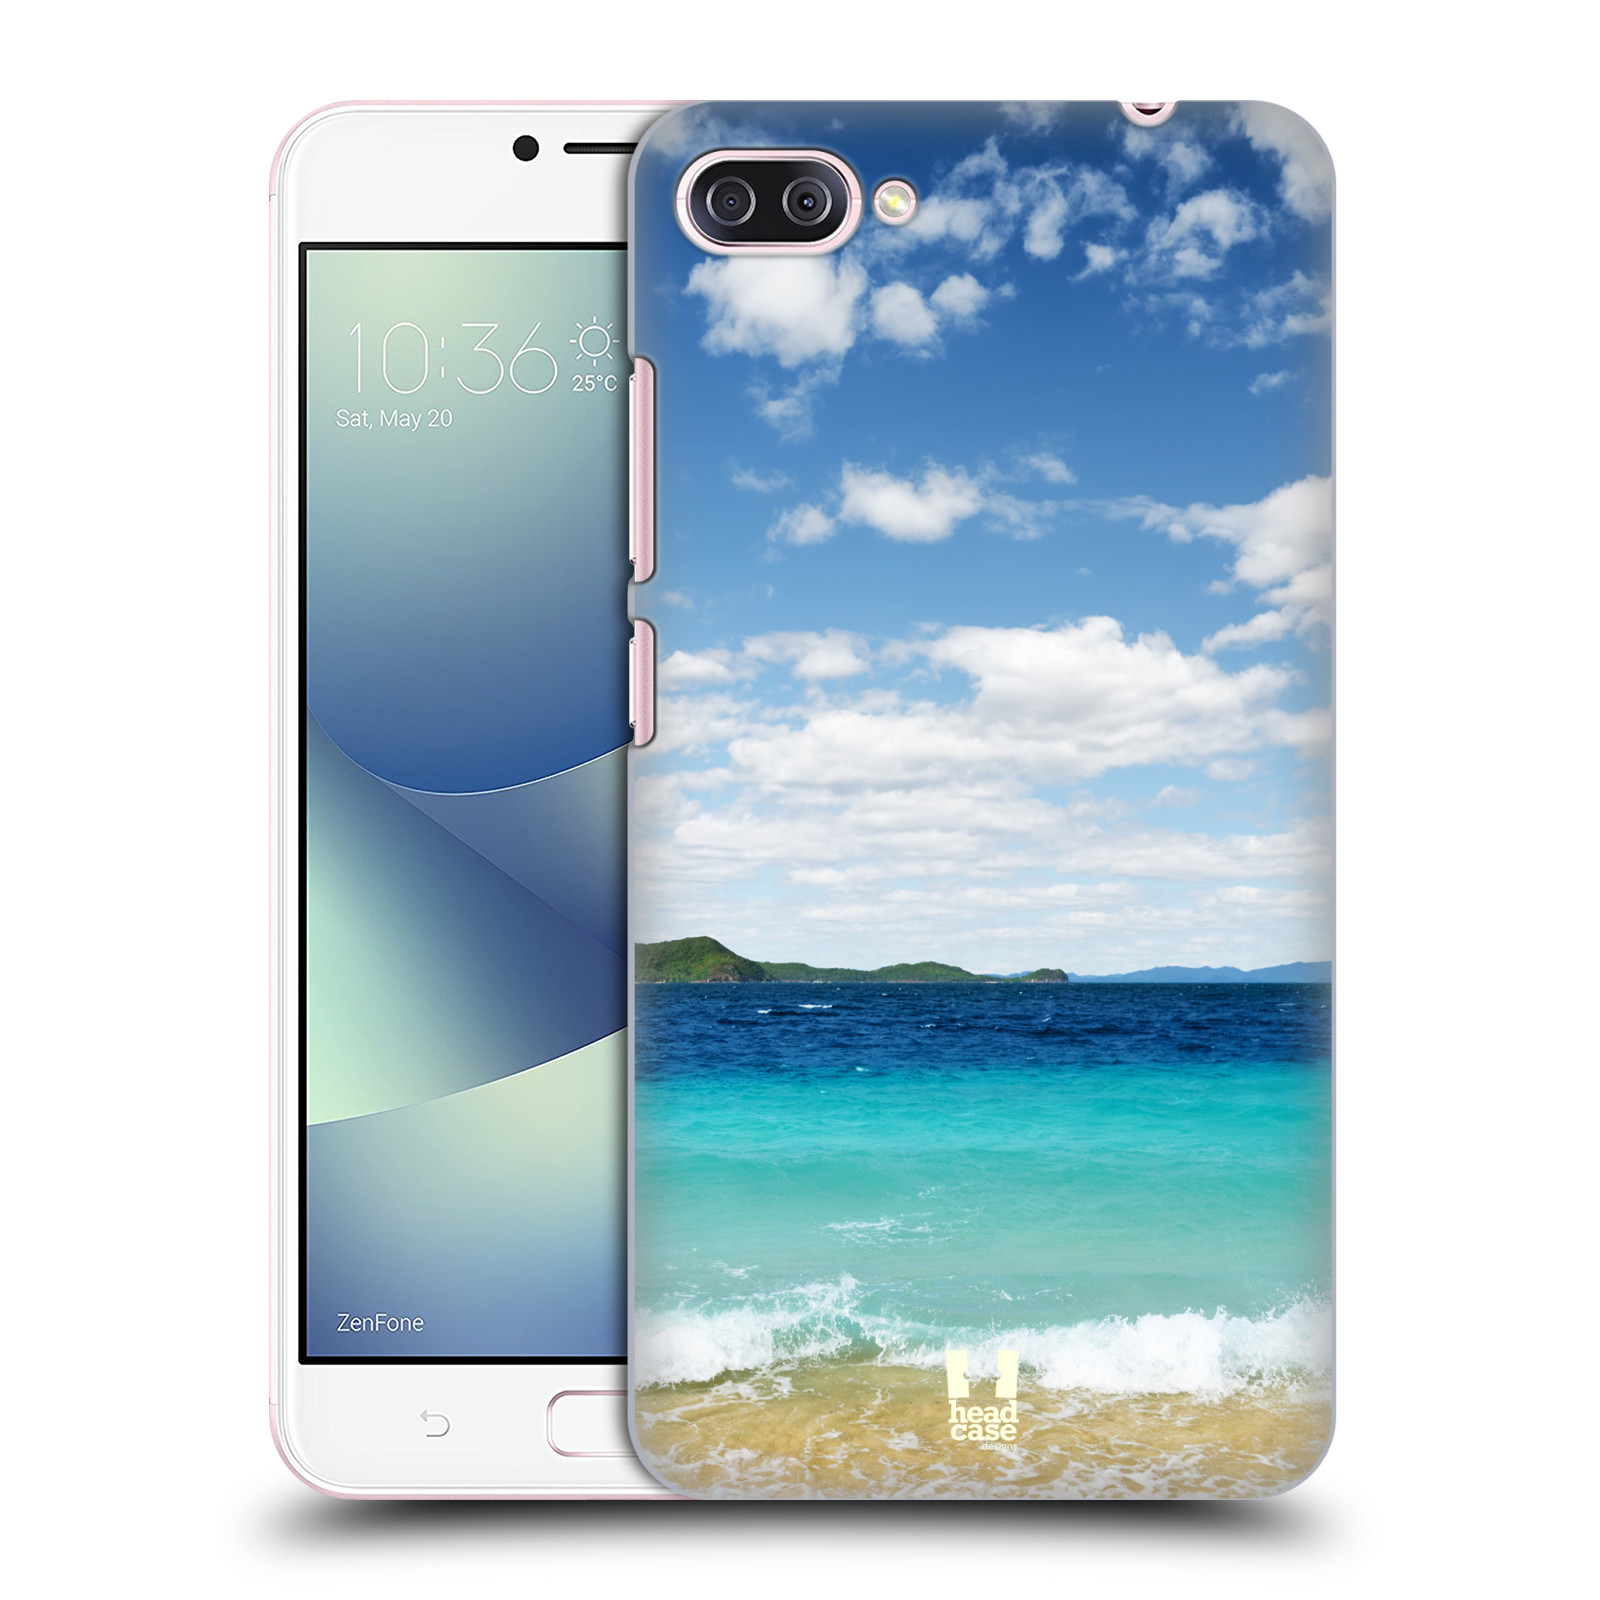 HEAD CASE plastový obal na mobil Asus Zenfone 4 MAX ZC554KL vzor Pláže a Moře VZDÁLENÝ OSTROV